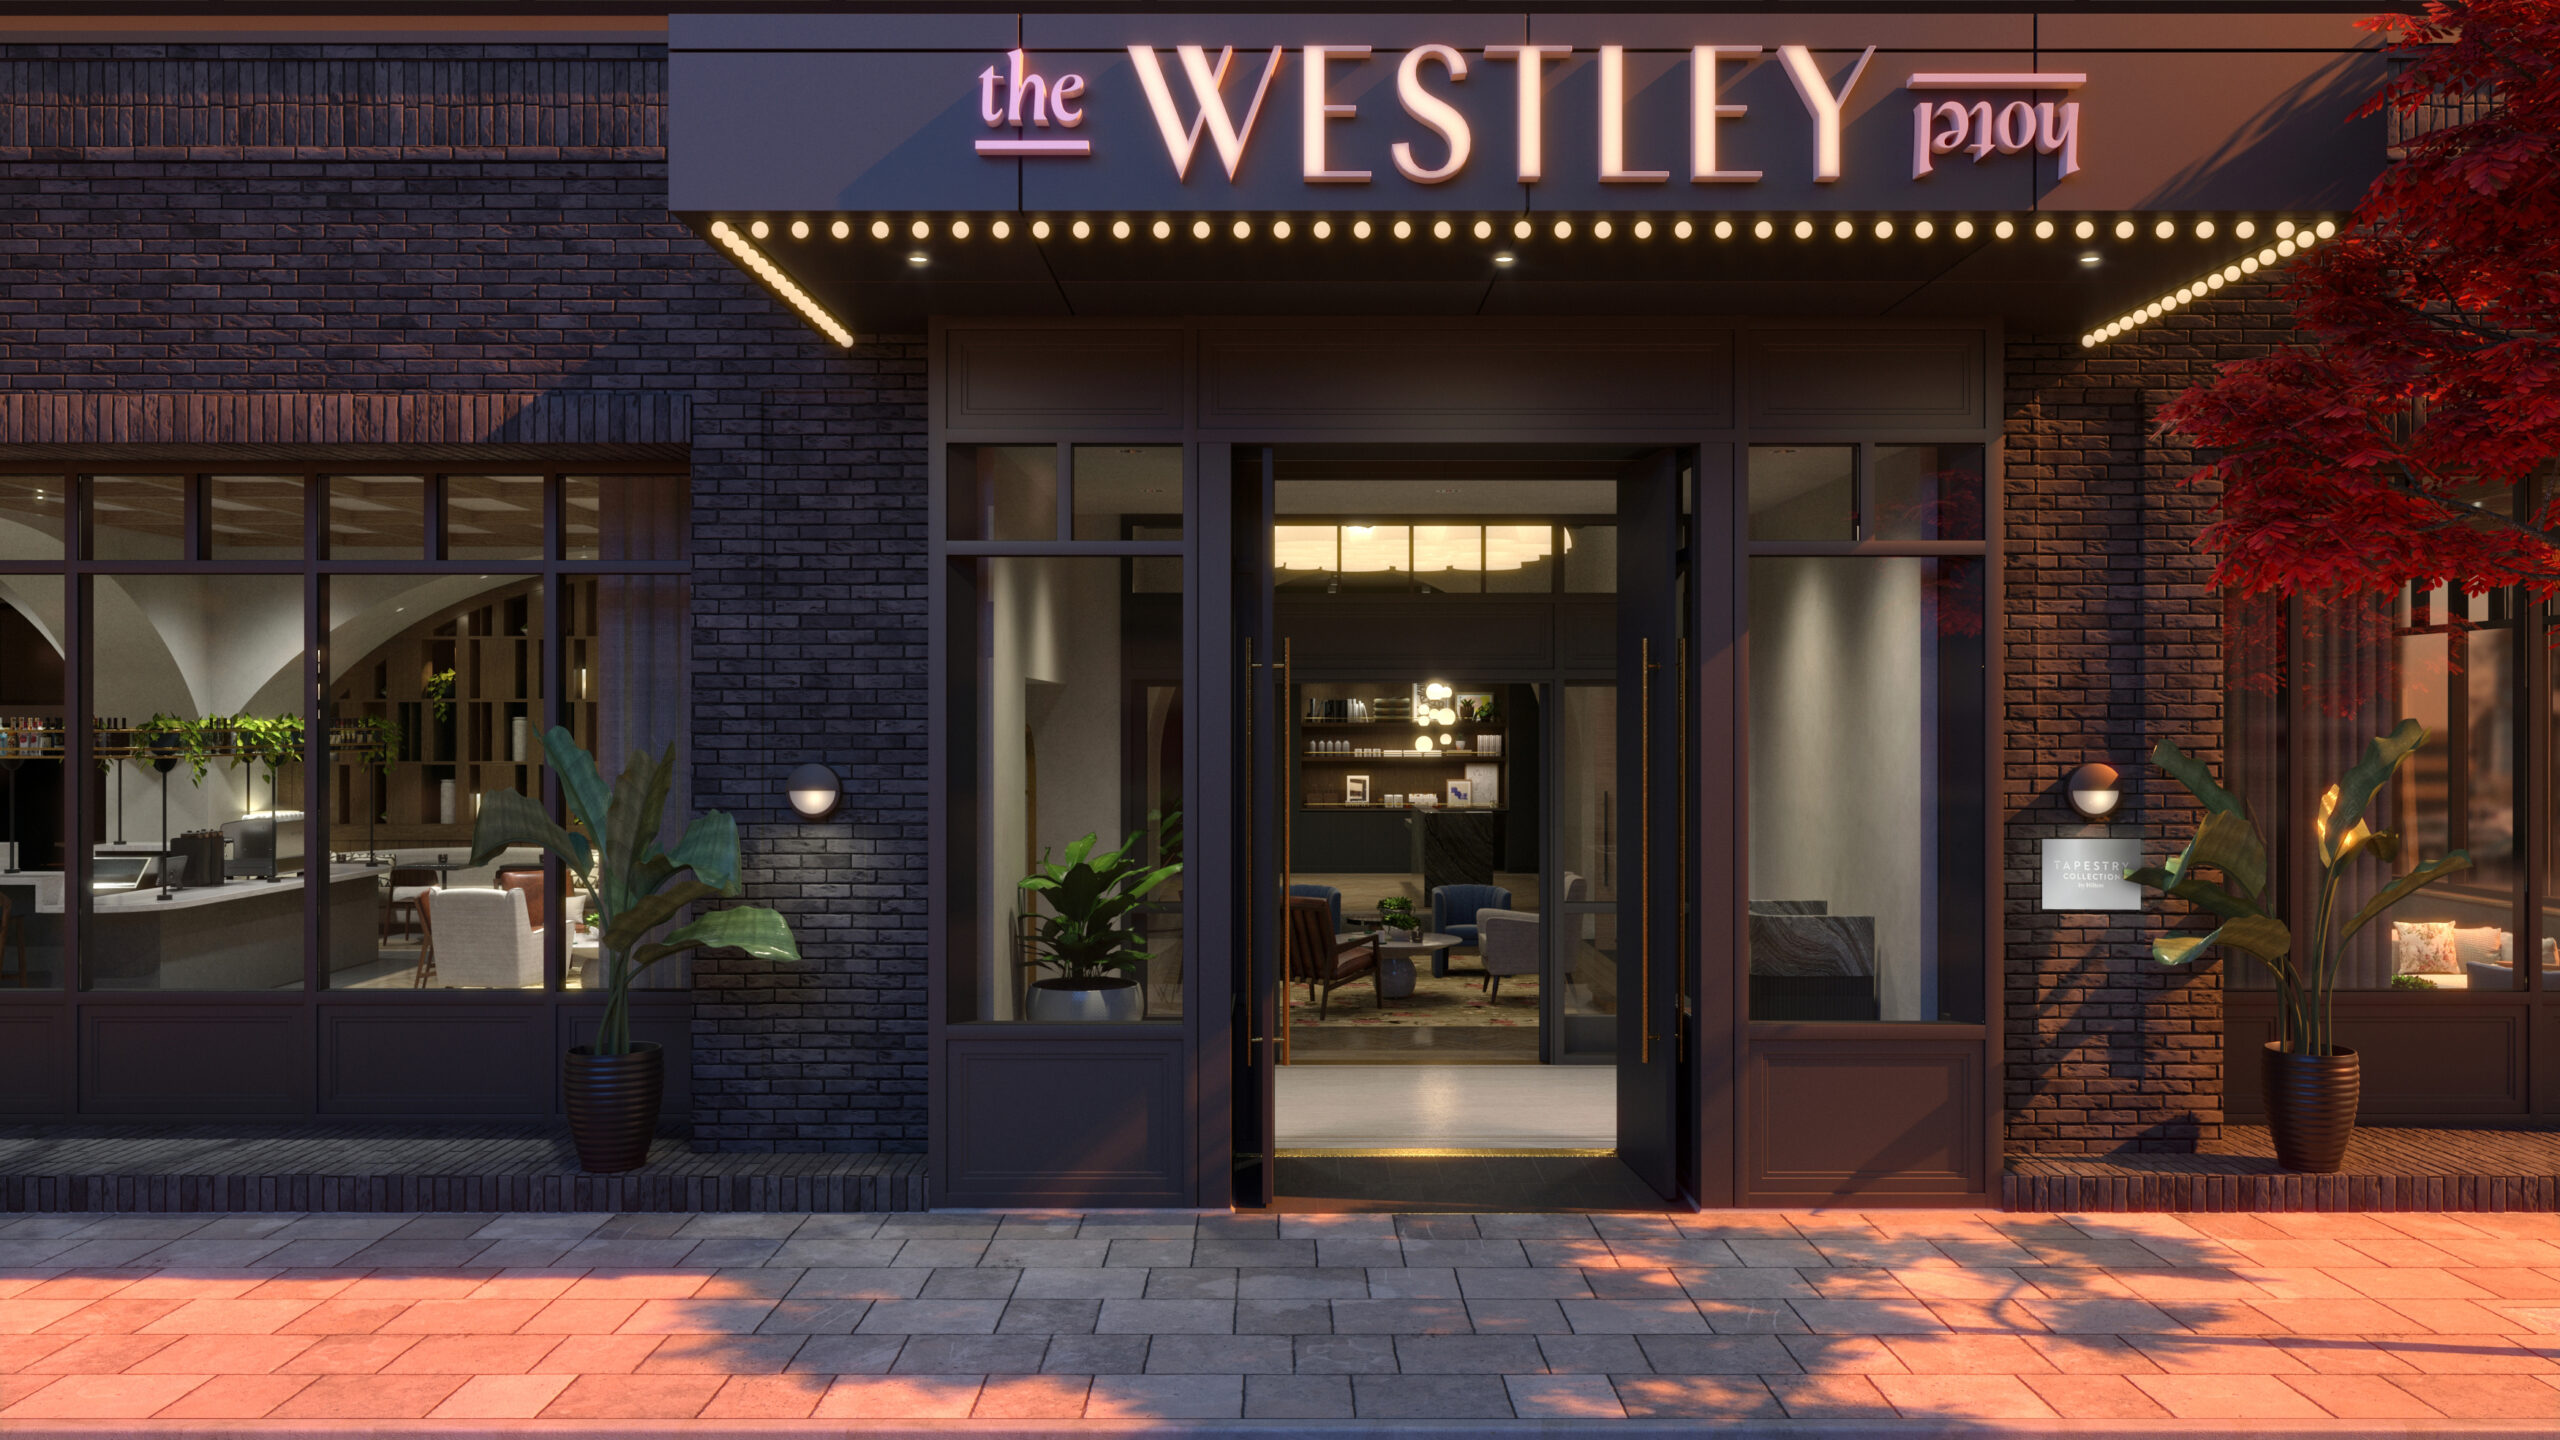 the westley hotel calgary wandereater